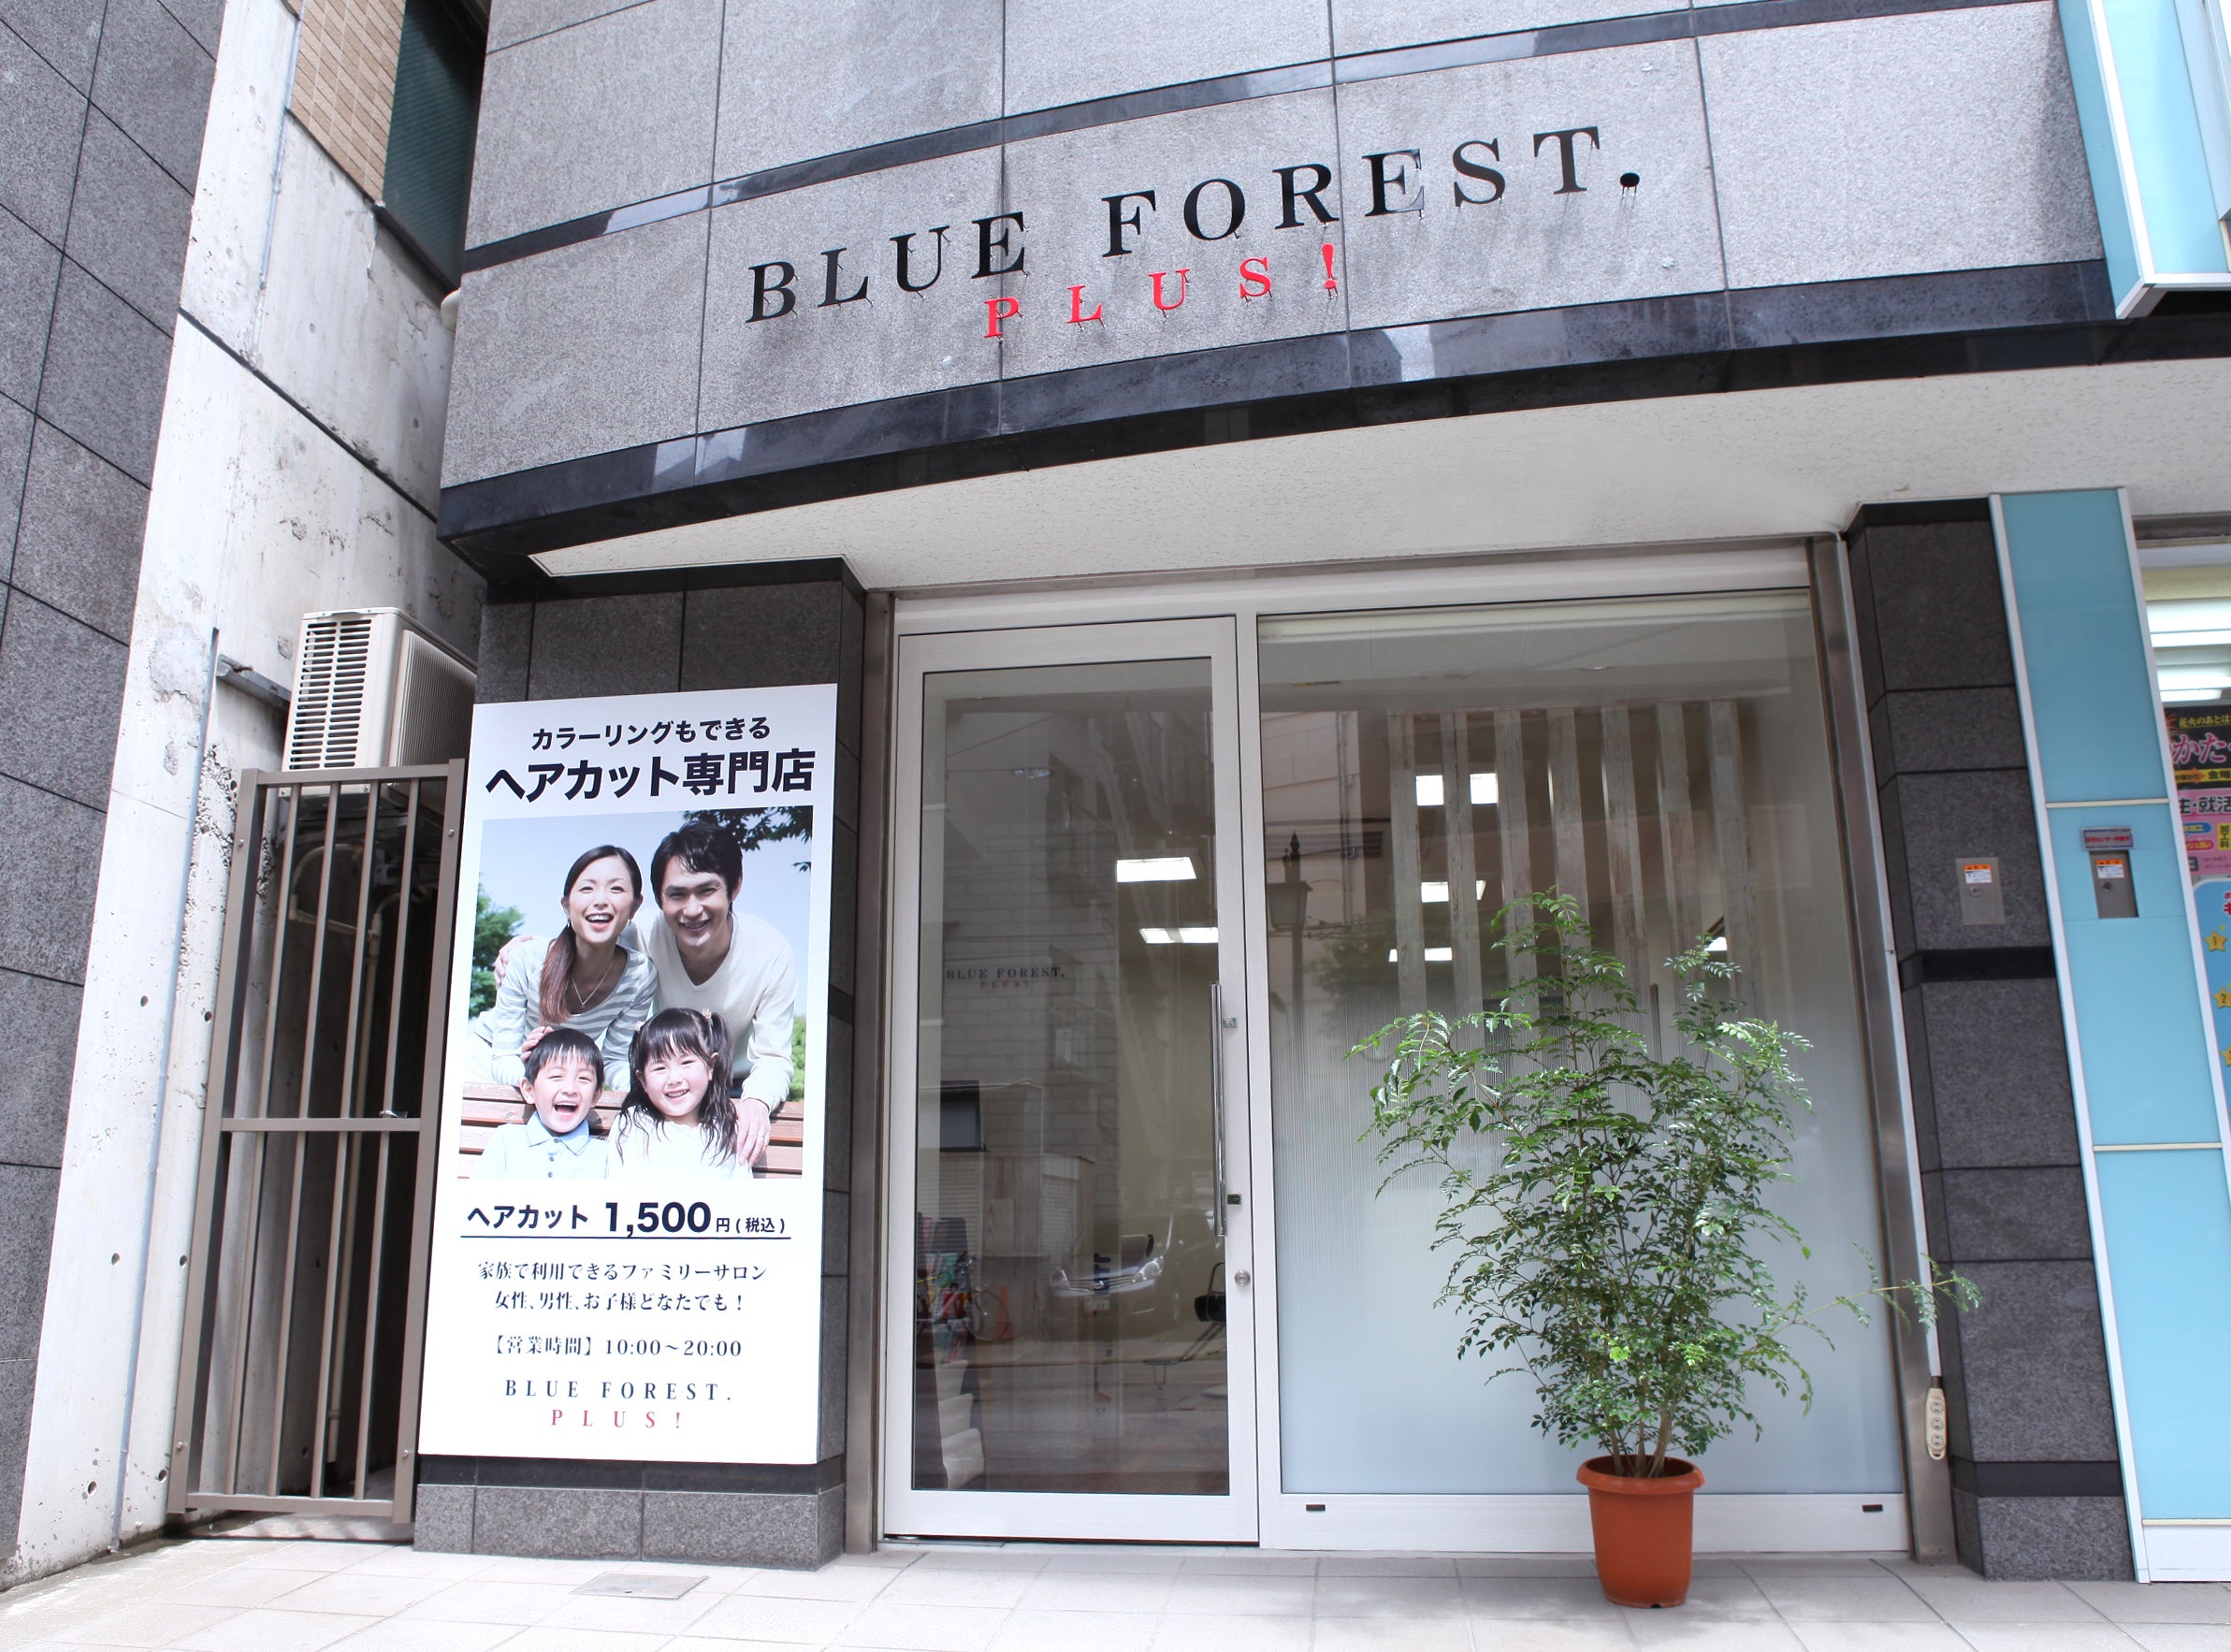 BLUE FOREST.PLUS!麻布二の橋店